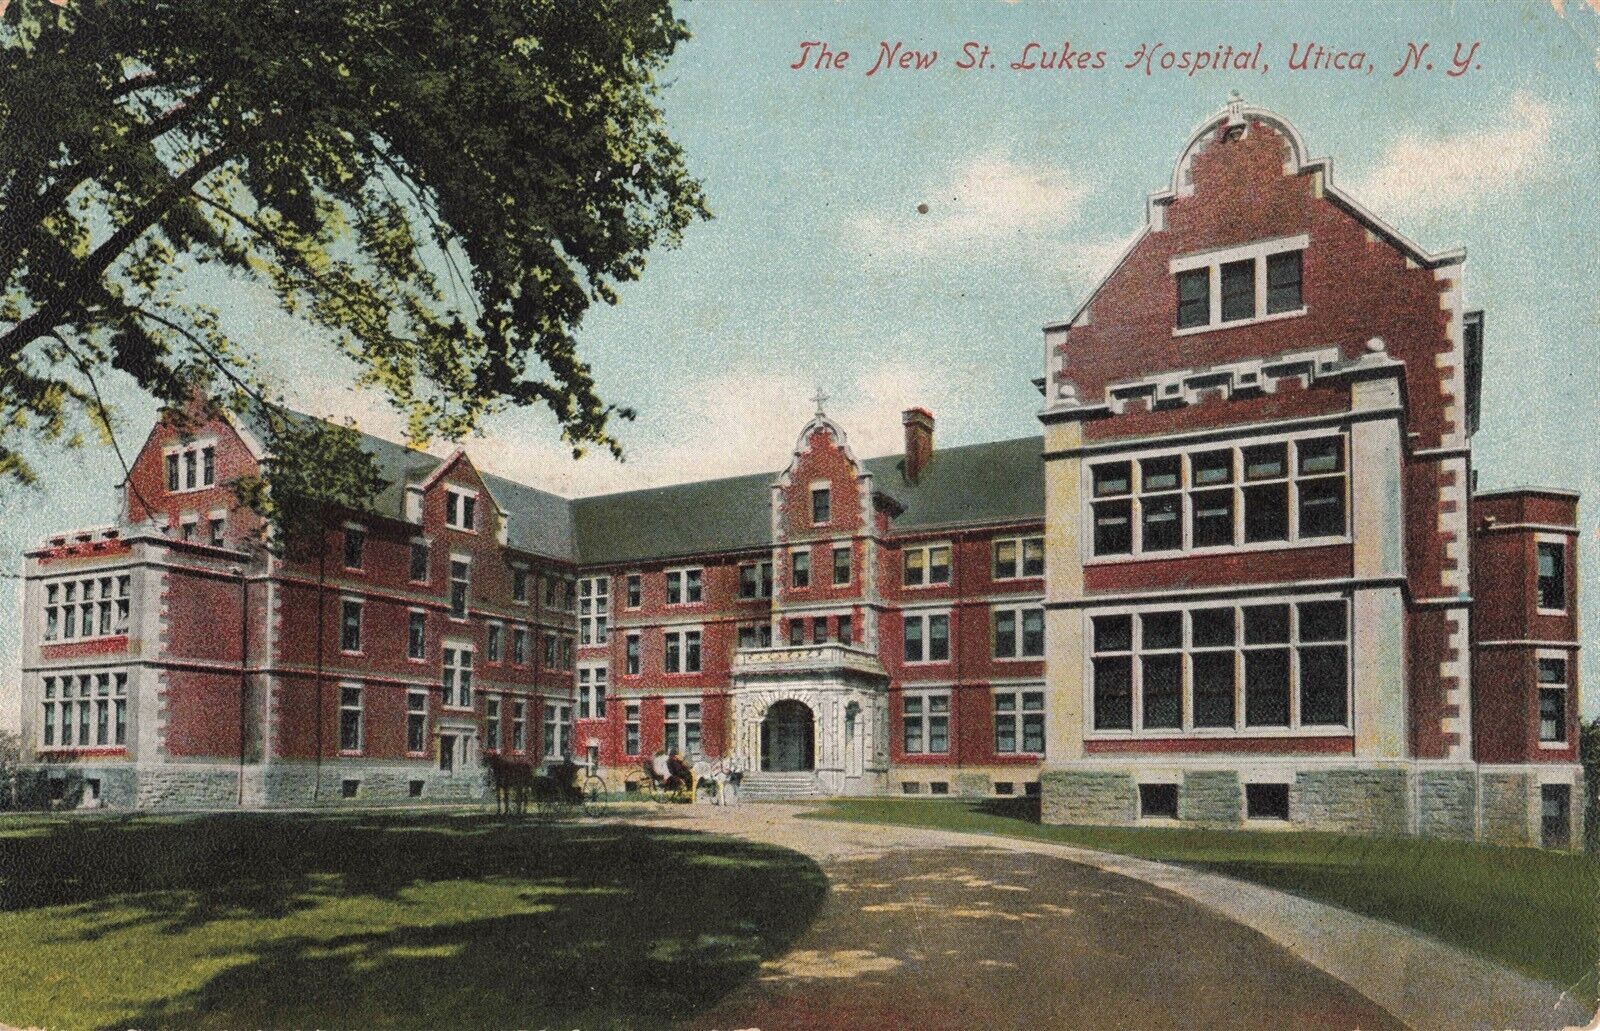 The New St Lukes Hospital Utica NY New York c1913 Postcard E133